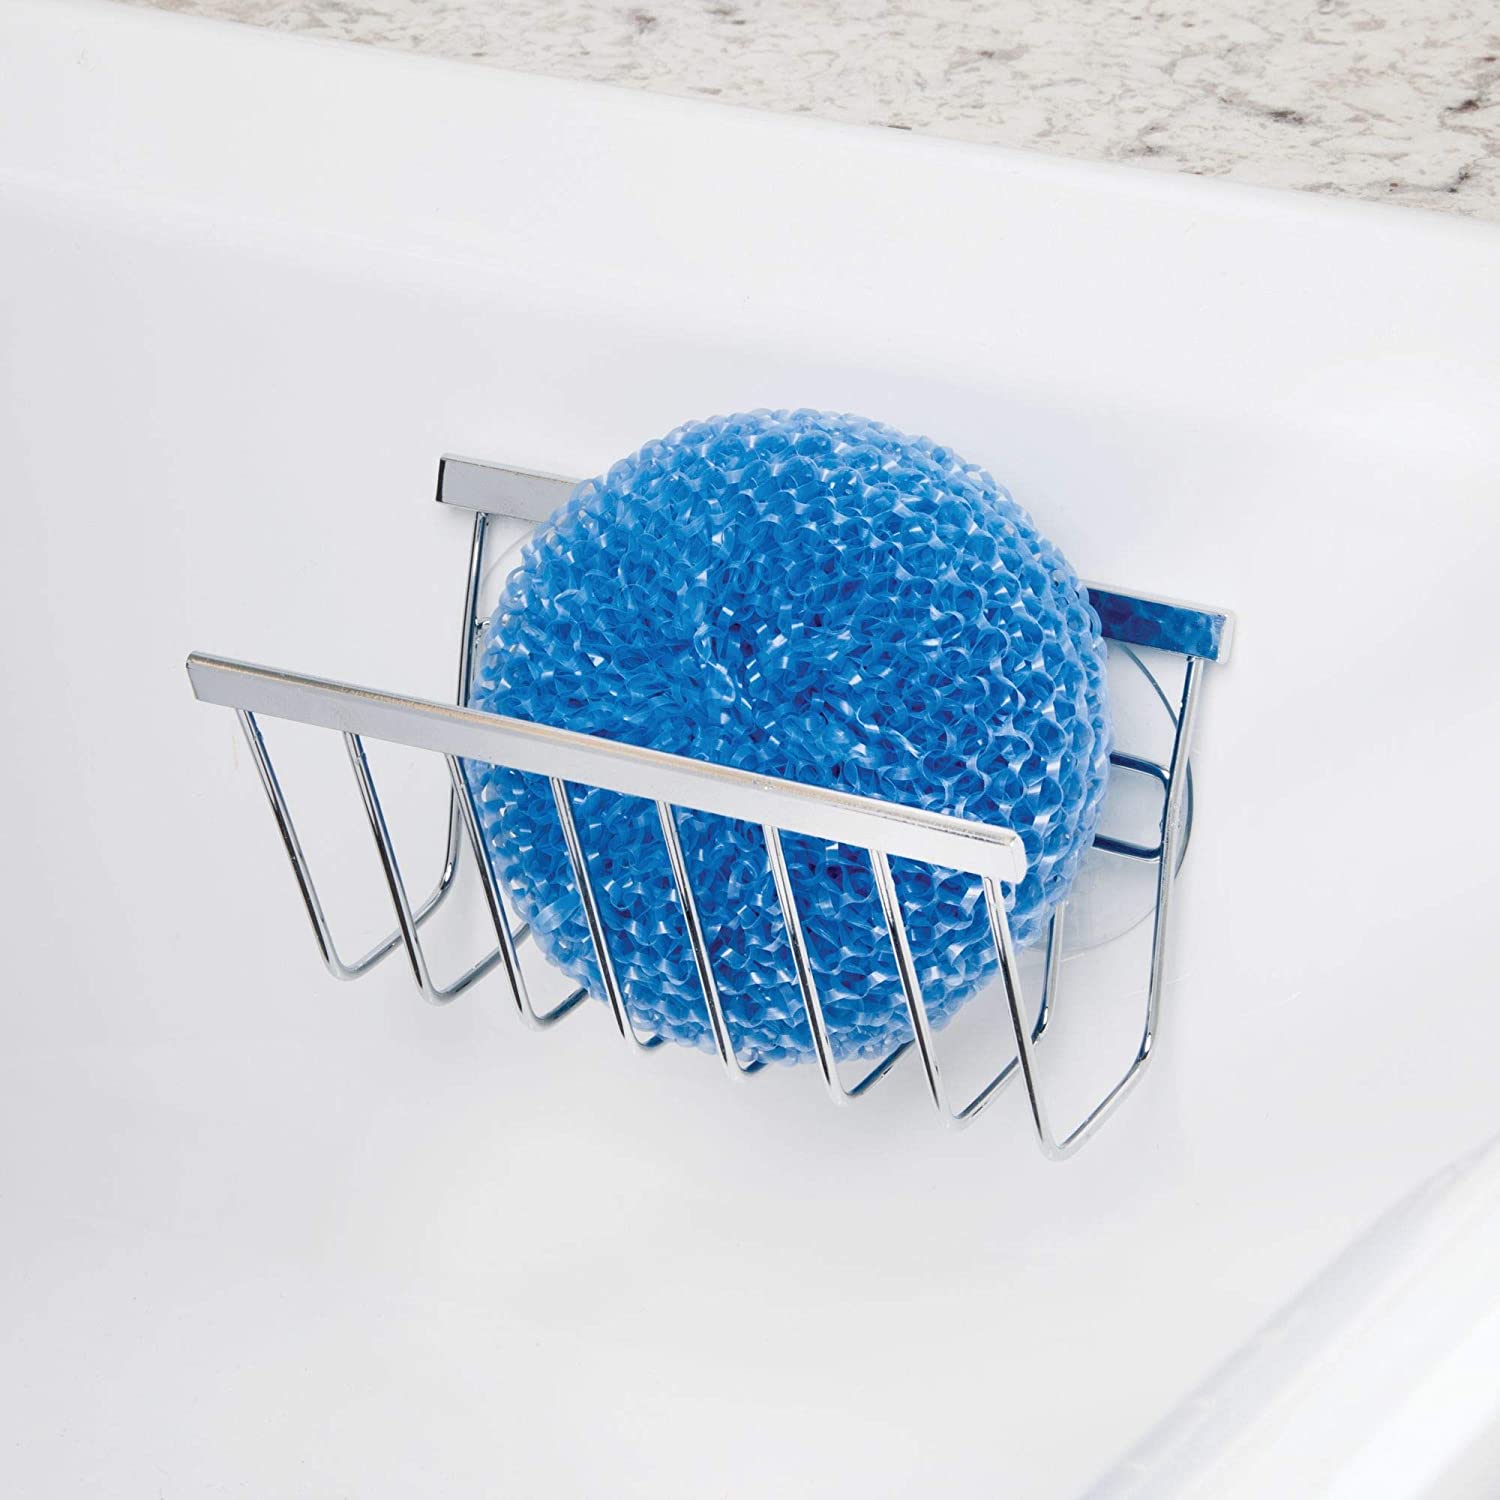 InterDesign Kitchen Sink Suction Holder – Polished Stainless Steel